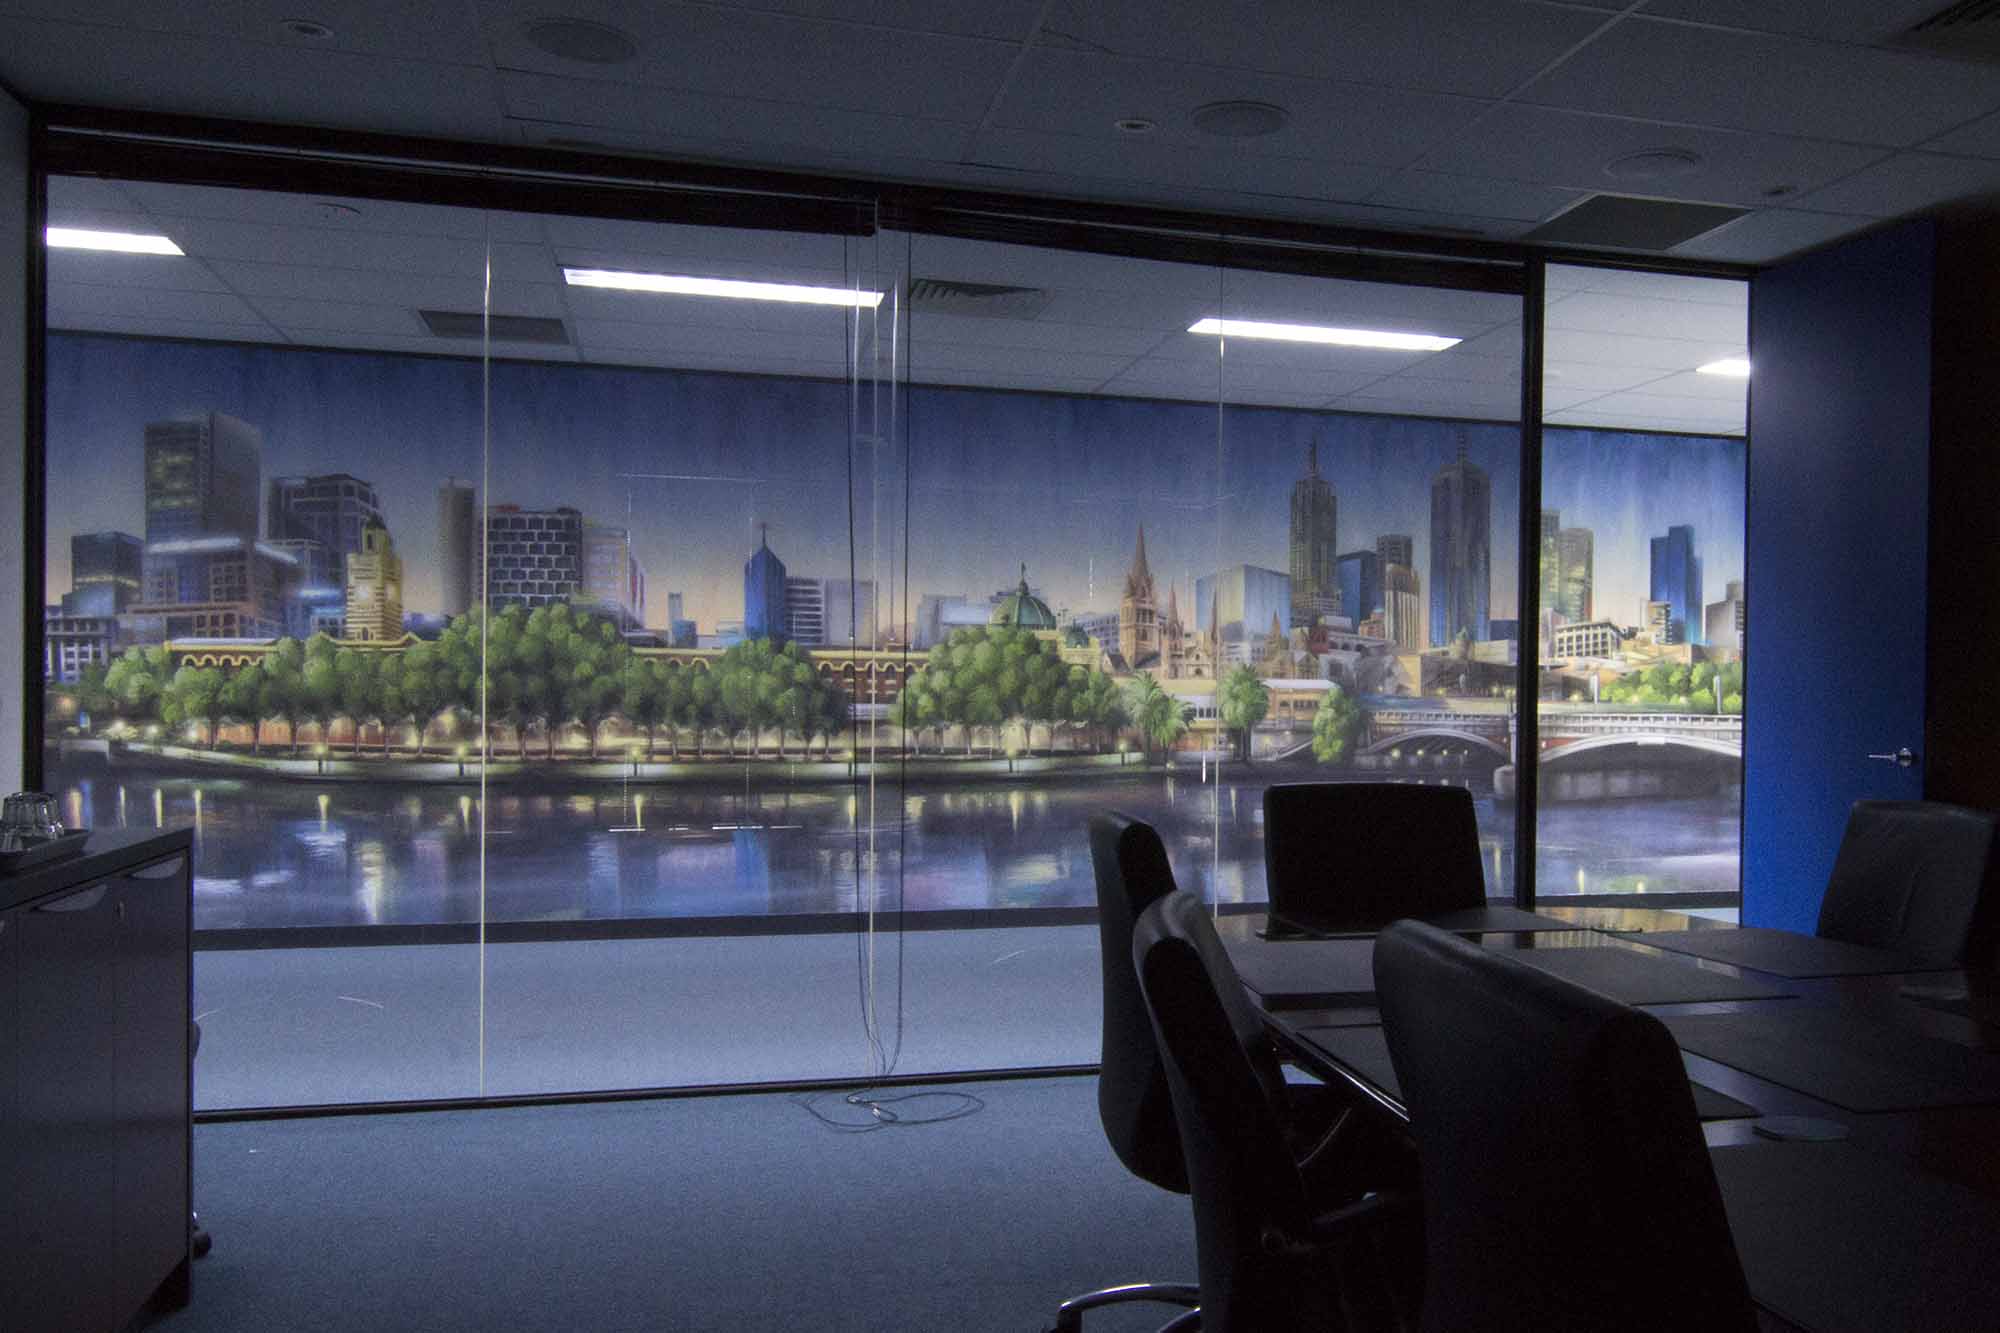 Melbourne city skyline graffiti interior decoration in office space.